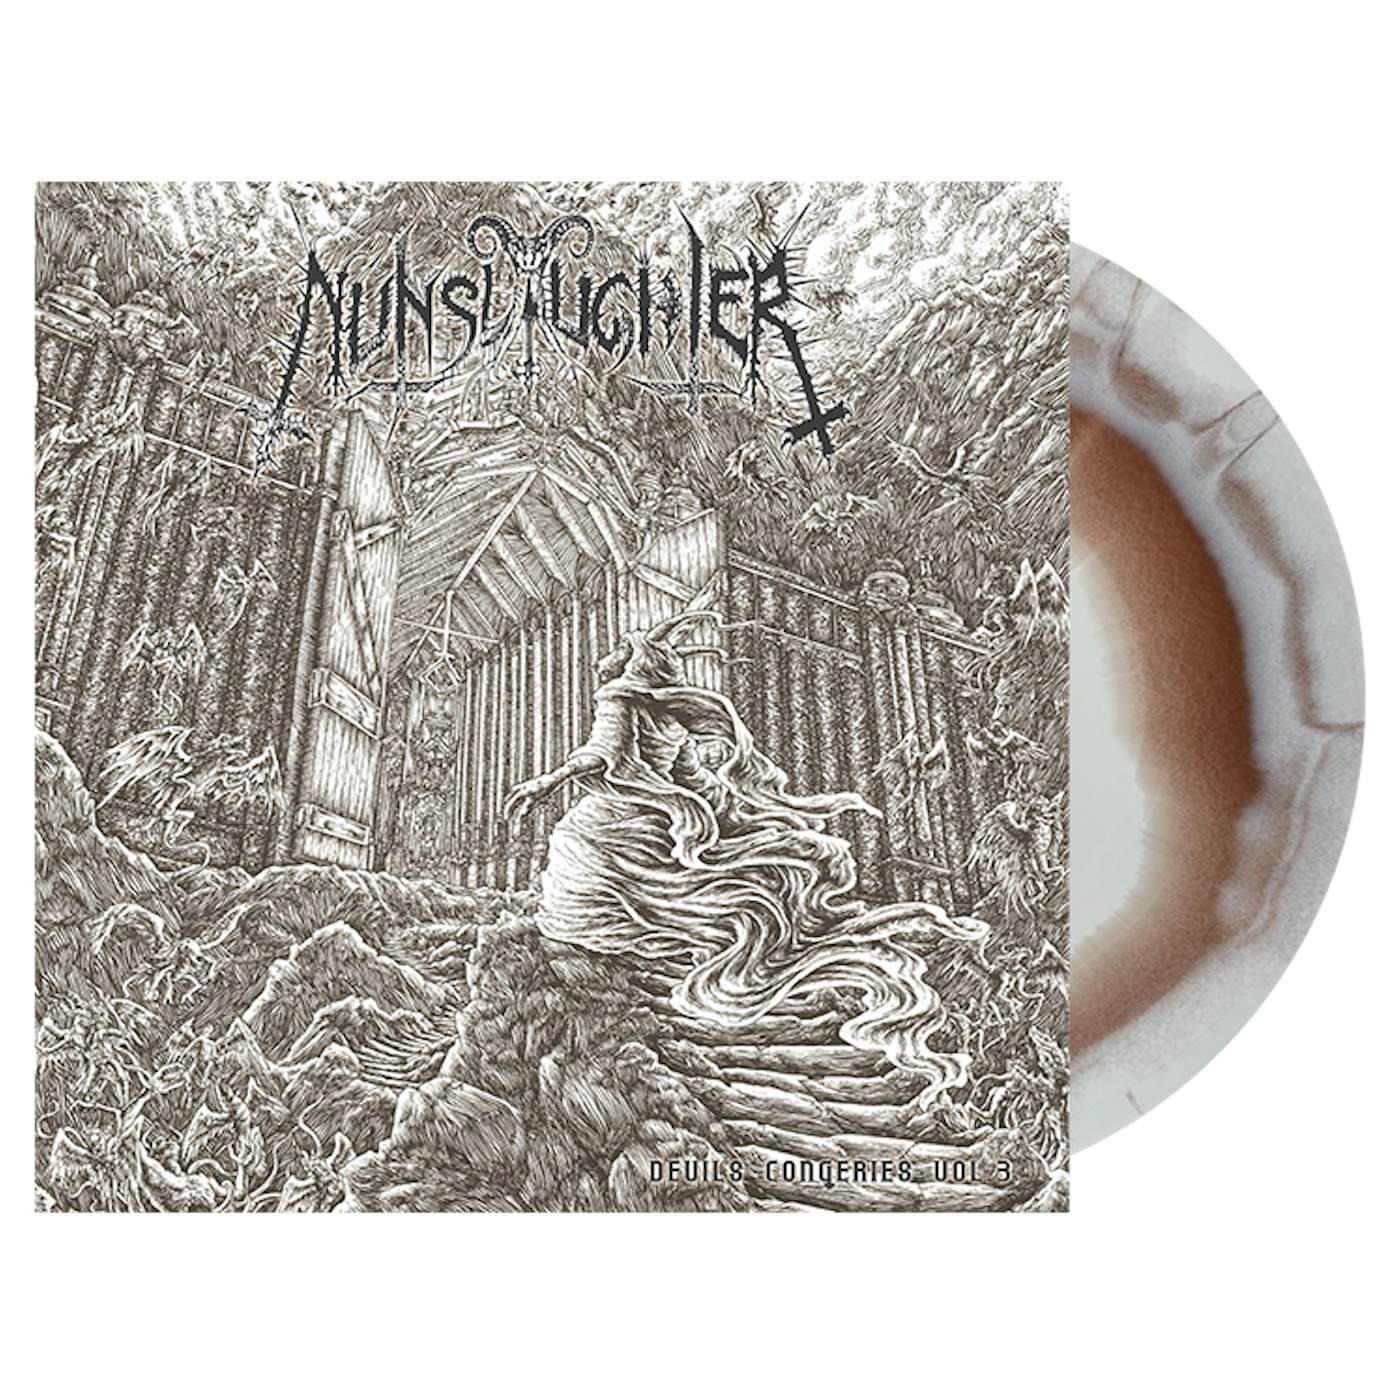 NUNSLAUGHTER - 'Devils Congeries Volume 3' LP (Vinyl)